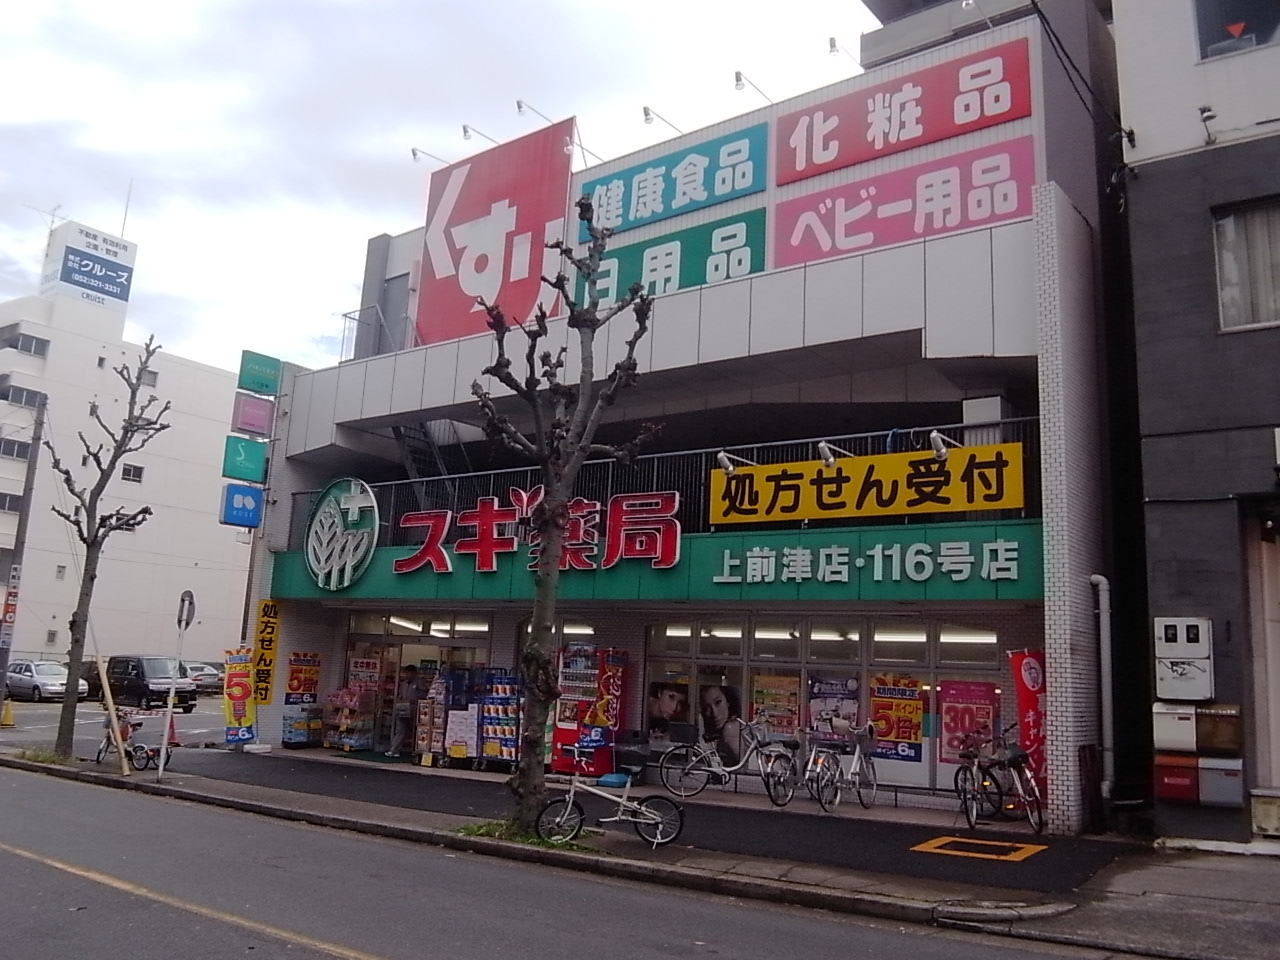 Dorakkusutoa. Cedar pharmacy Kamimaezu shop 435m until (drugstore)